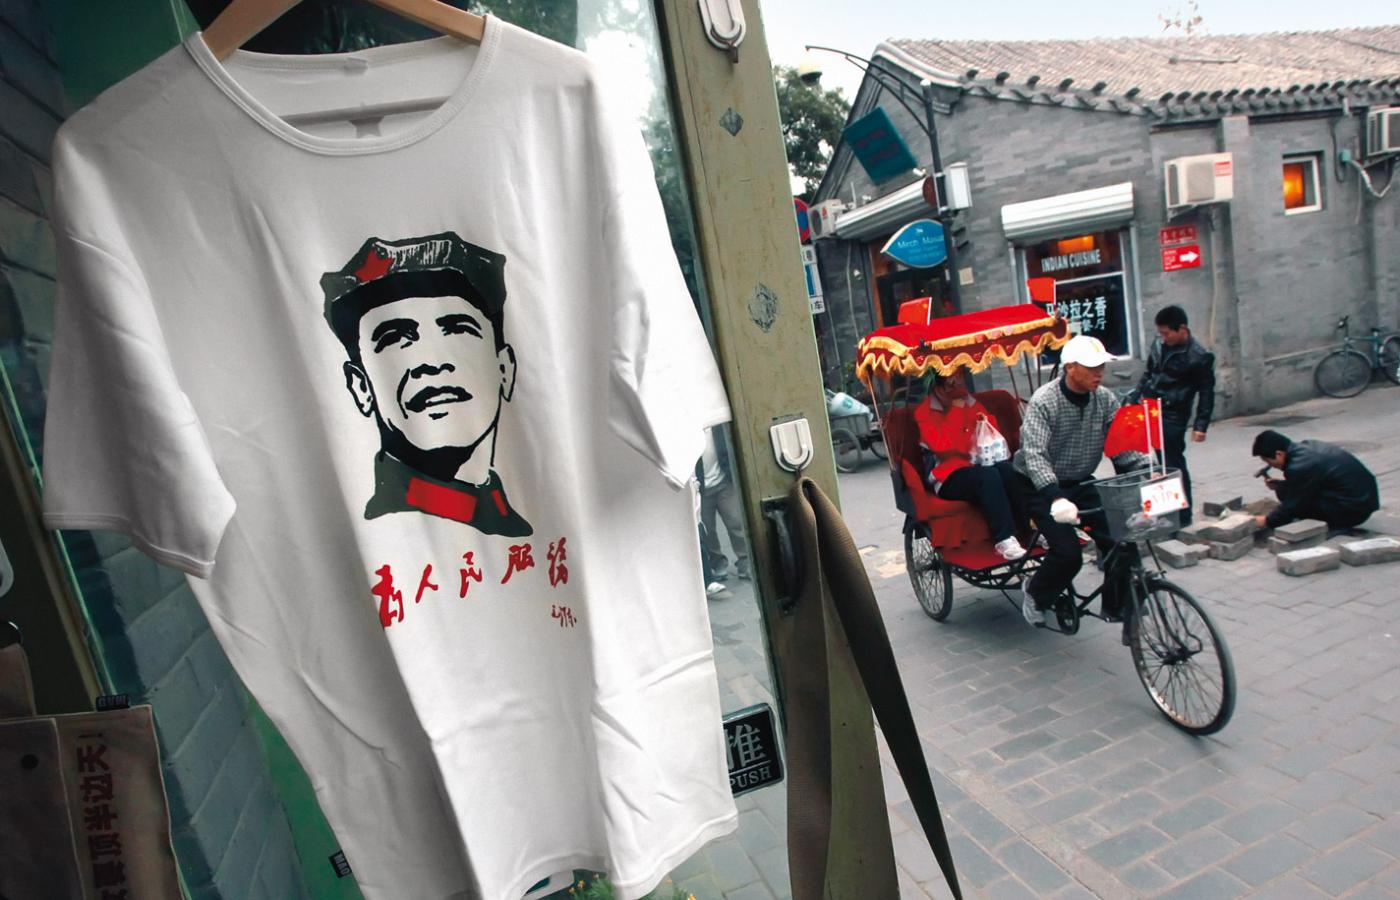 Stylizowany na Mao prezydent Obama na T-shirtach.